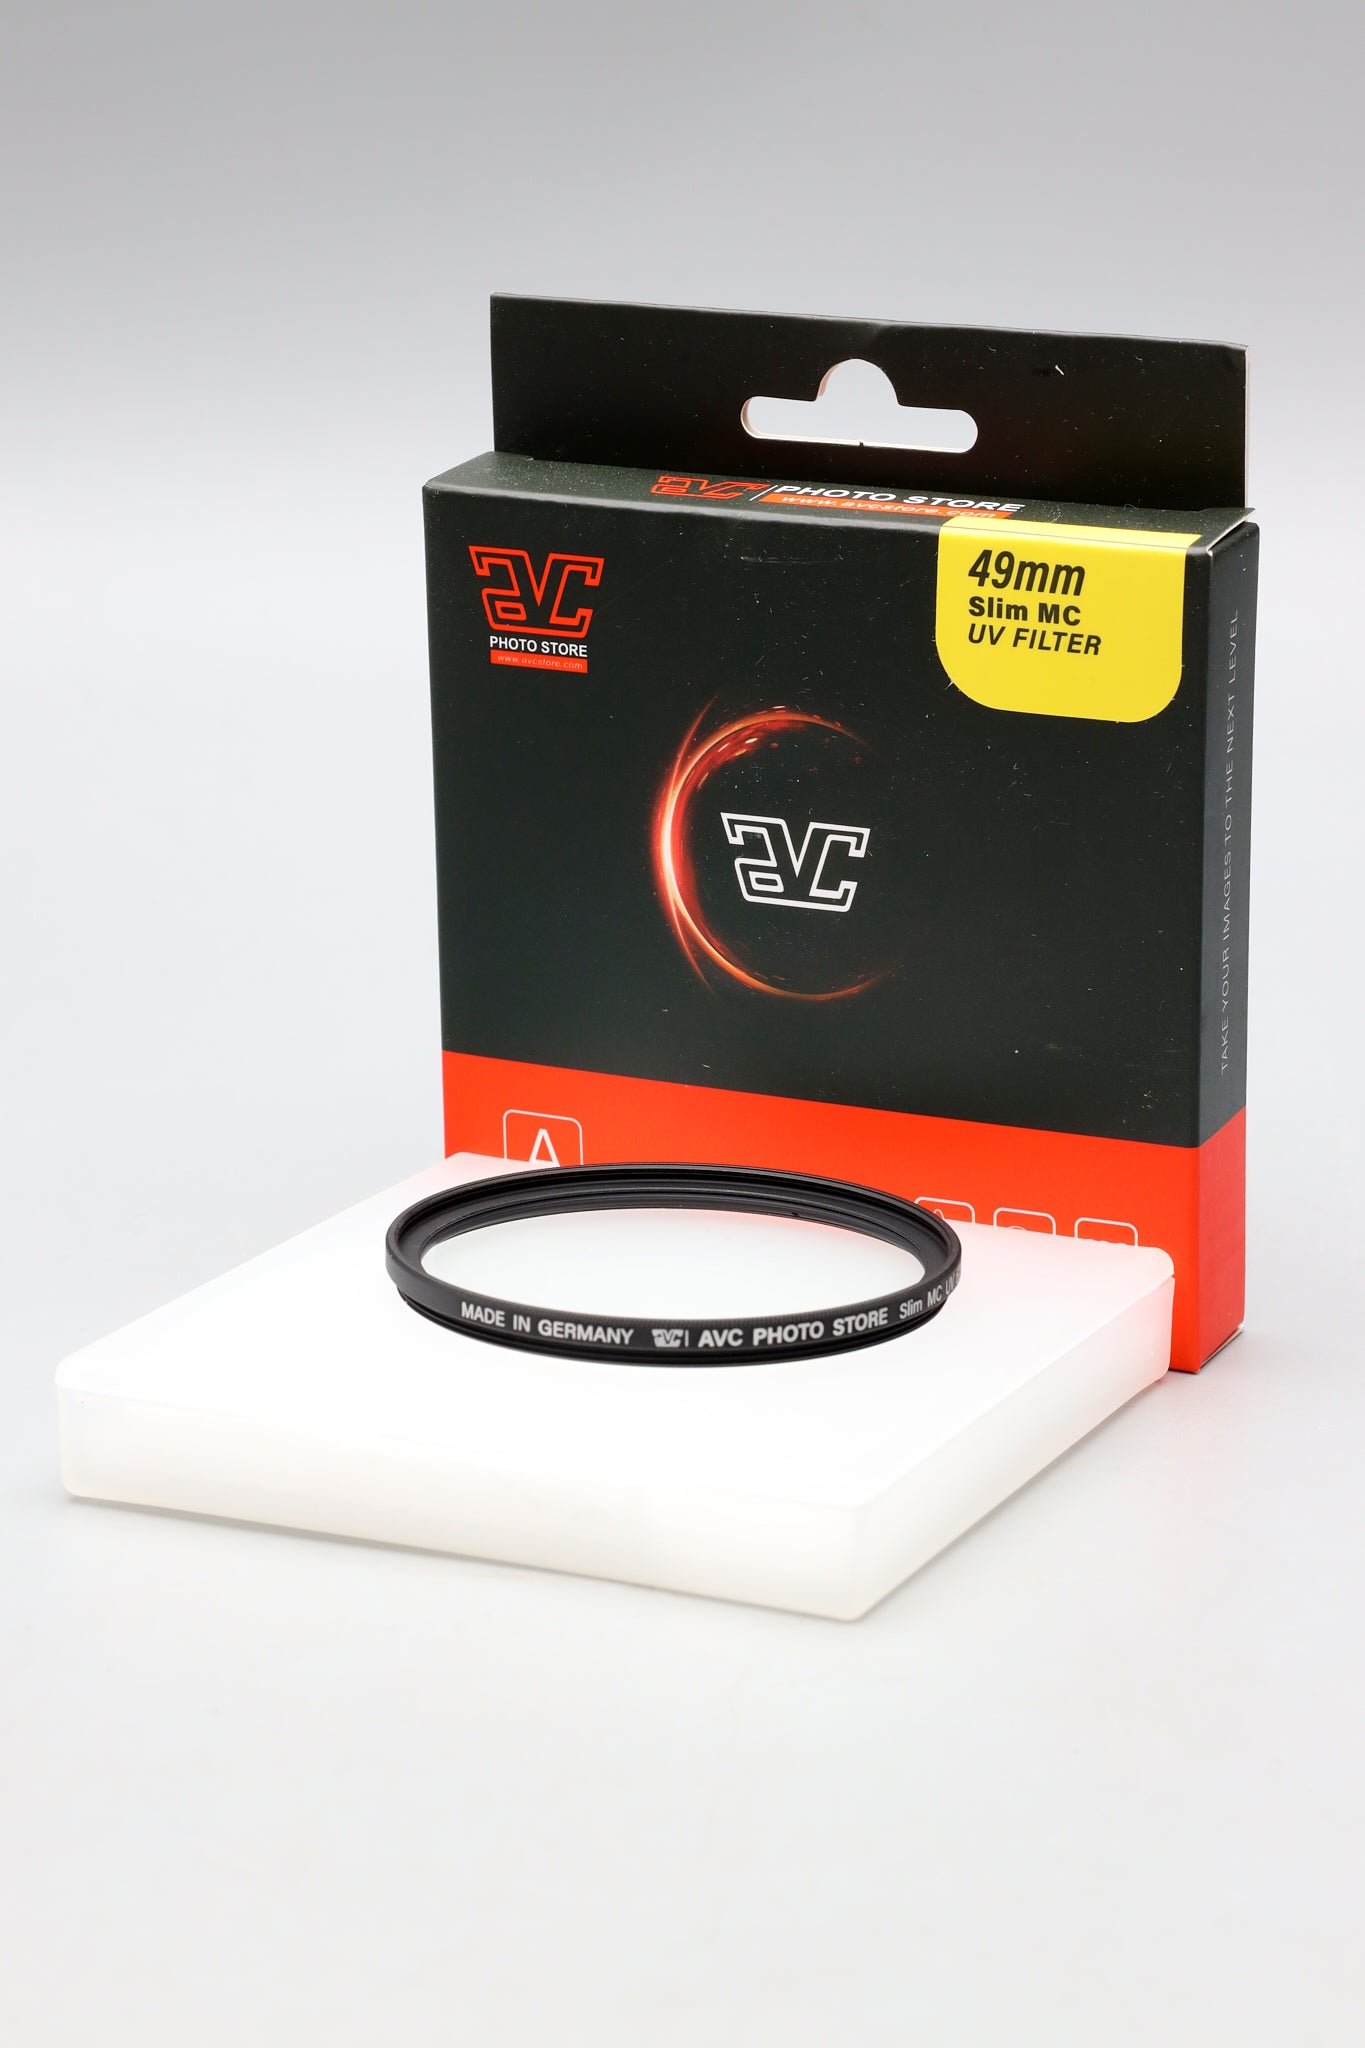 AVC Slim MC UV Filter.